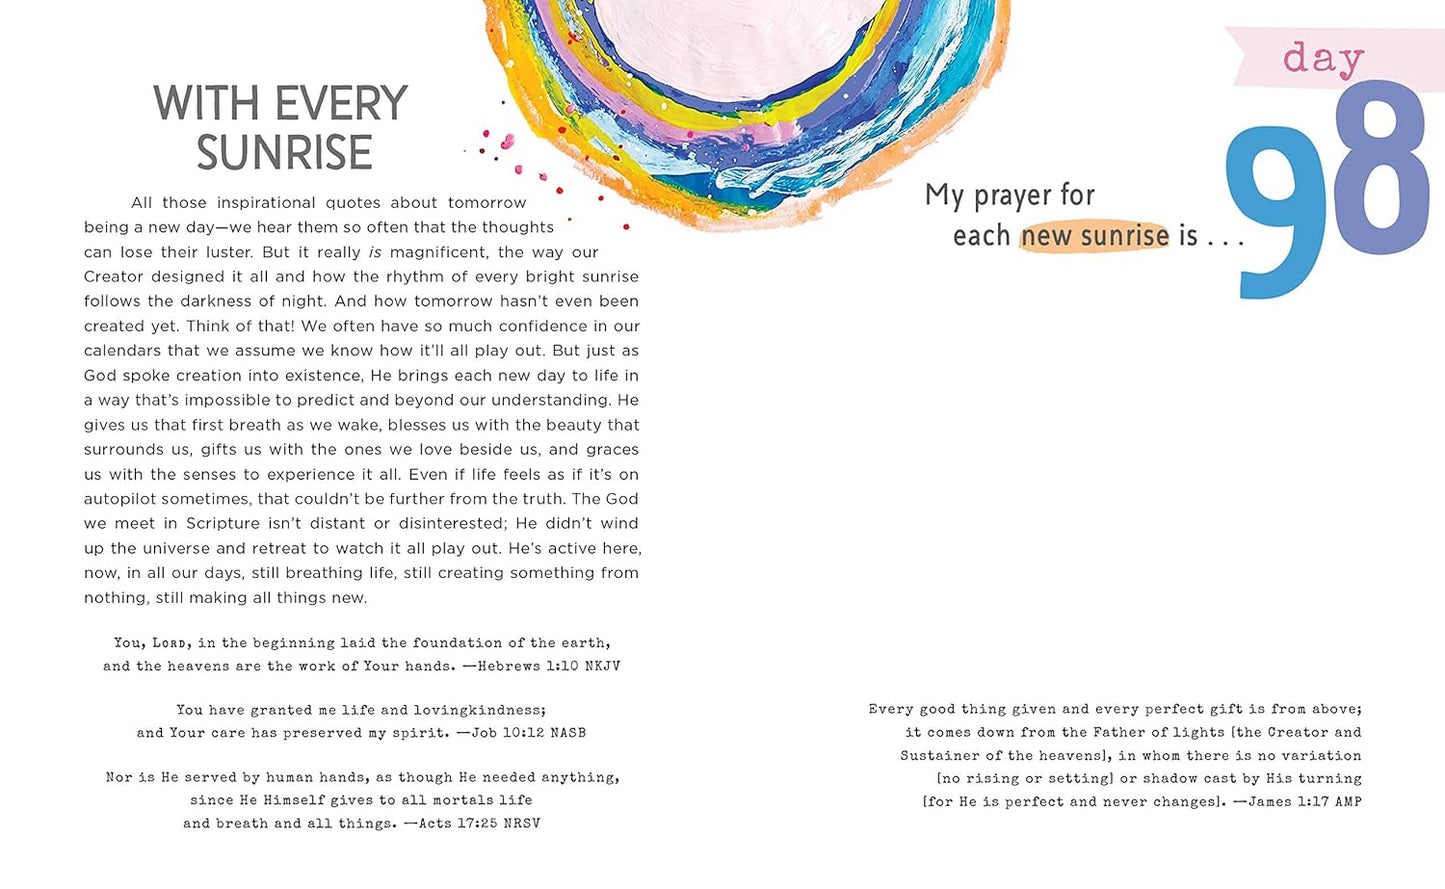 100 Days of Prayer: A Devotional Journal